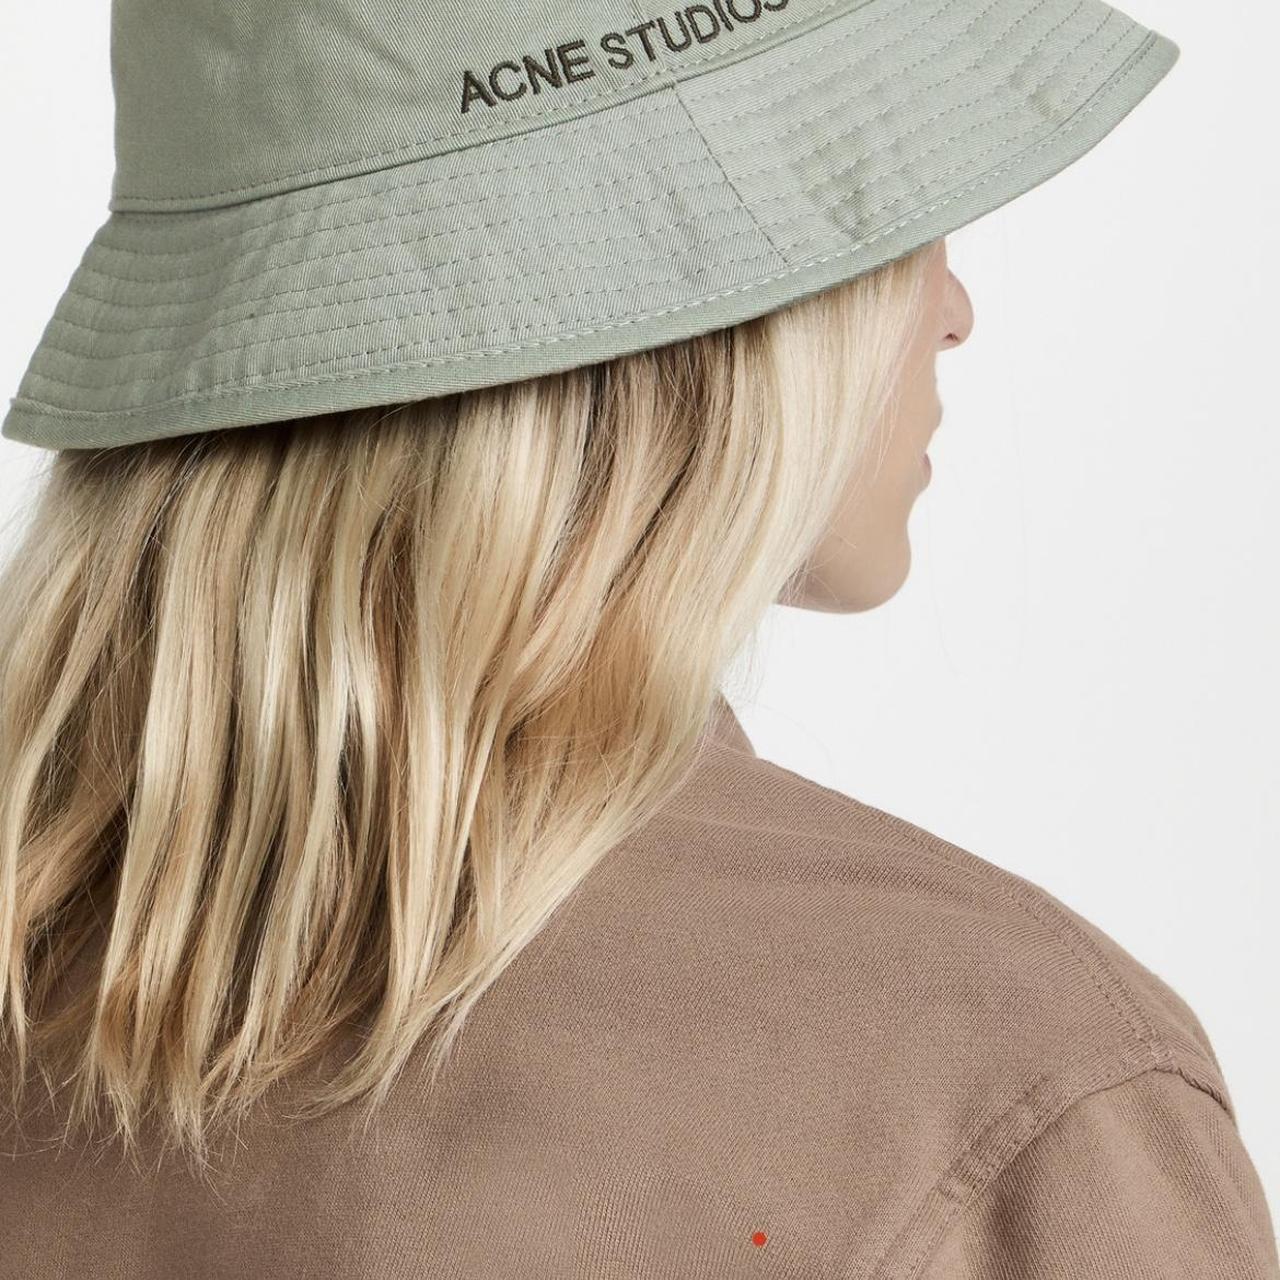 Acne Studios Women's Green and Khaki Hat